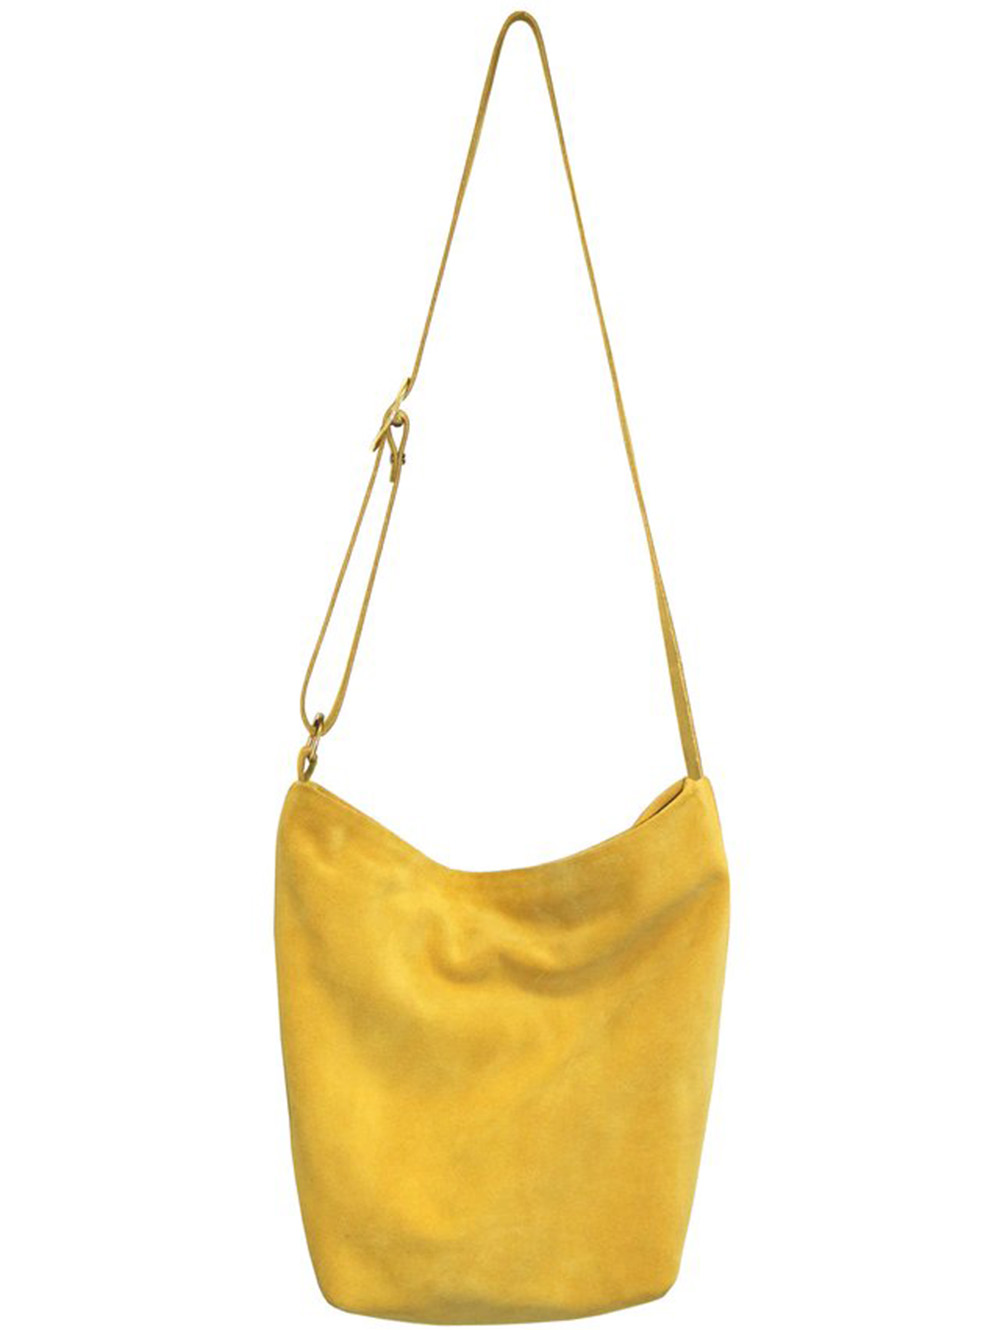 Georgia Jay Baby Bucket bag, $410 in buttercup suede